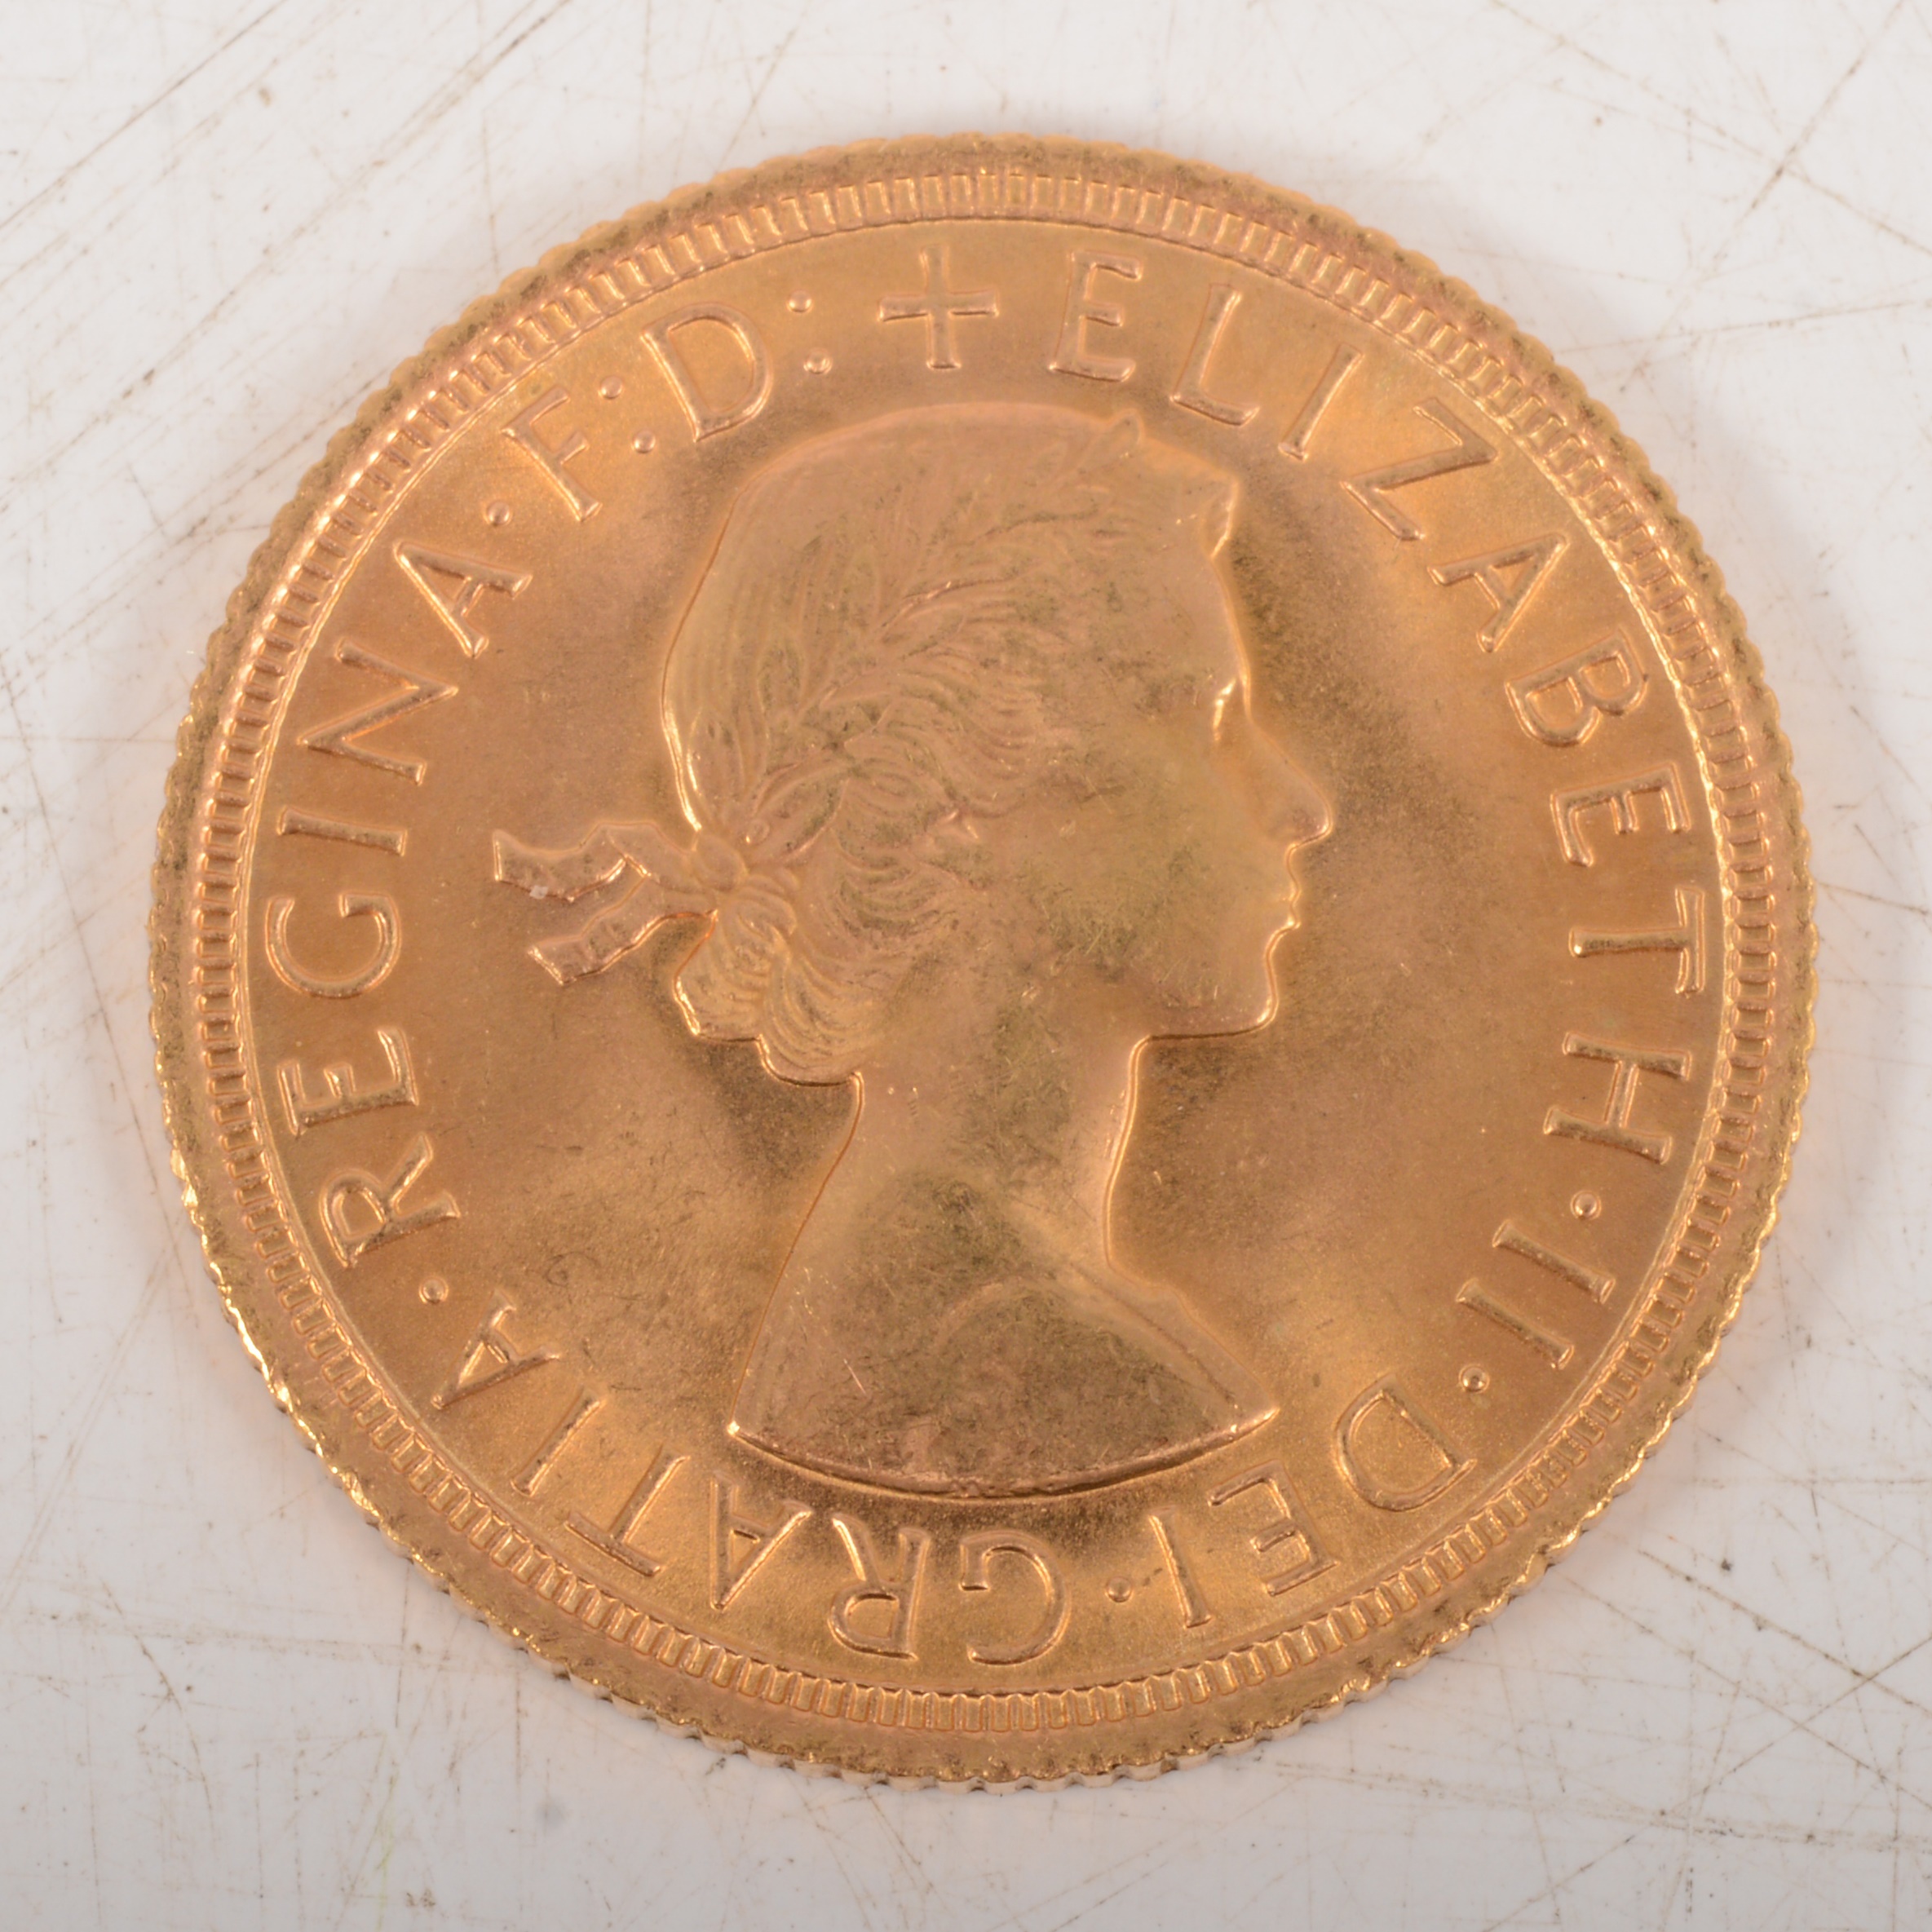 Elizabeth II gold Sovereign coin, 1966 - Image 2 of 2